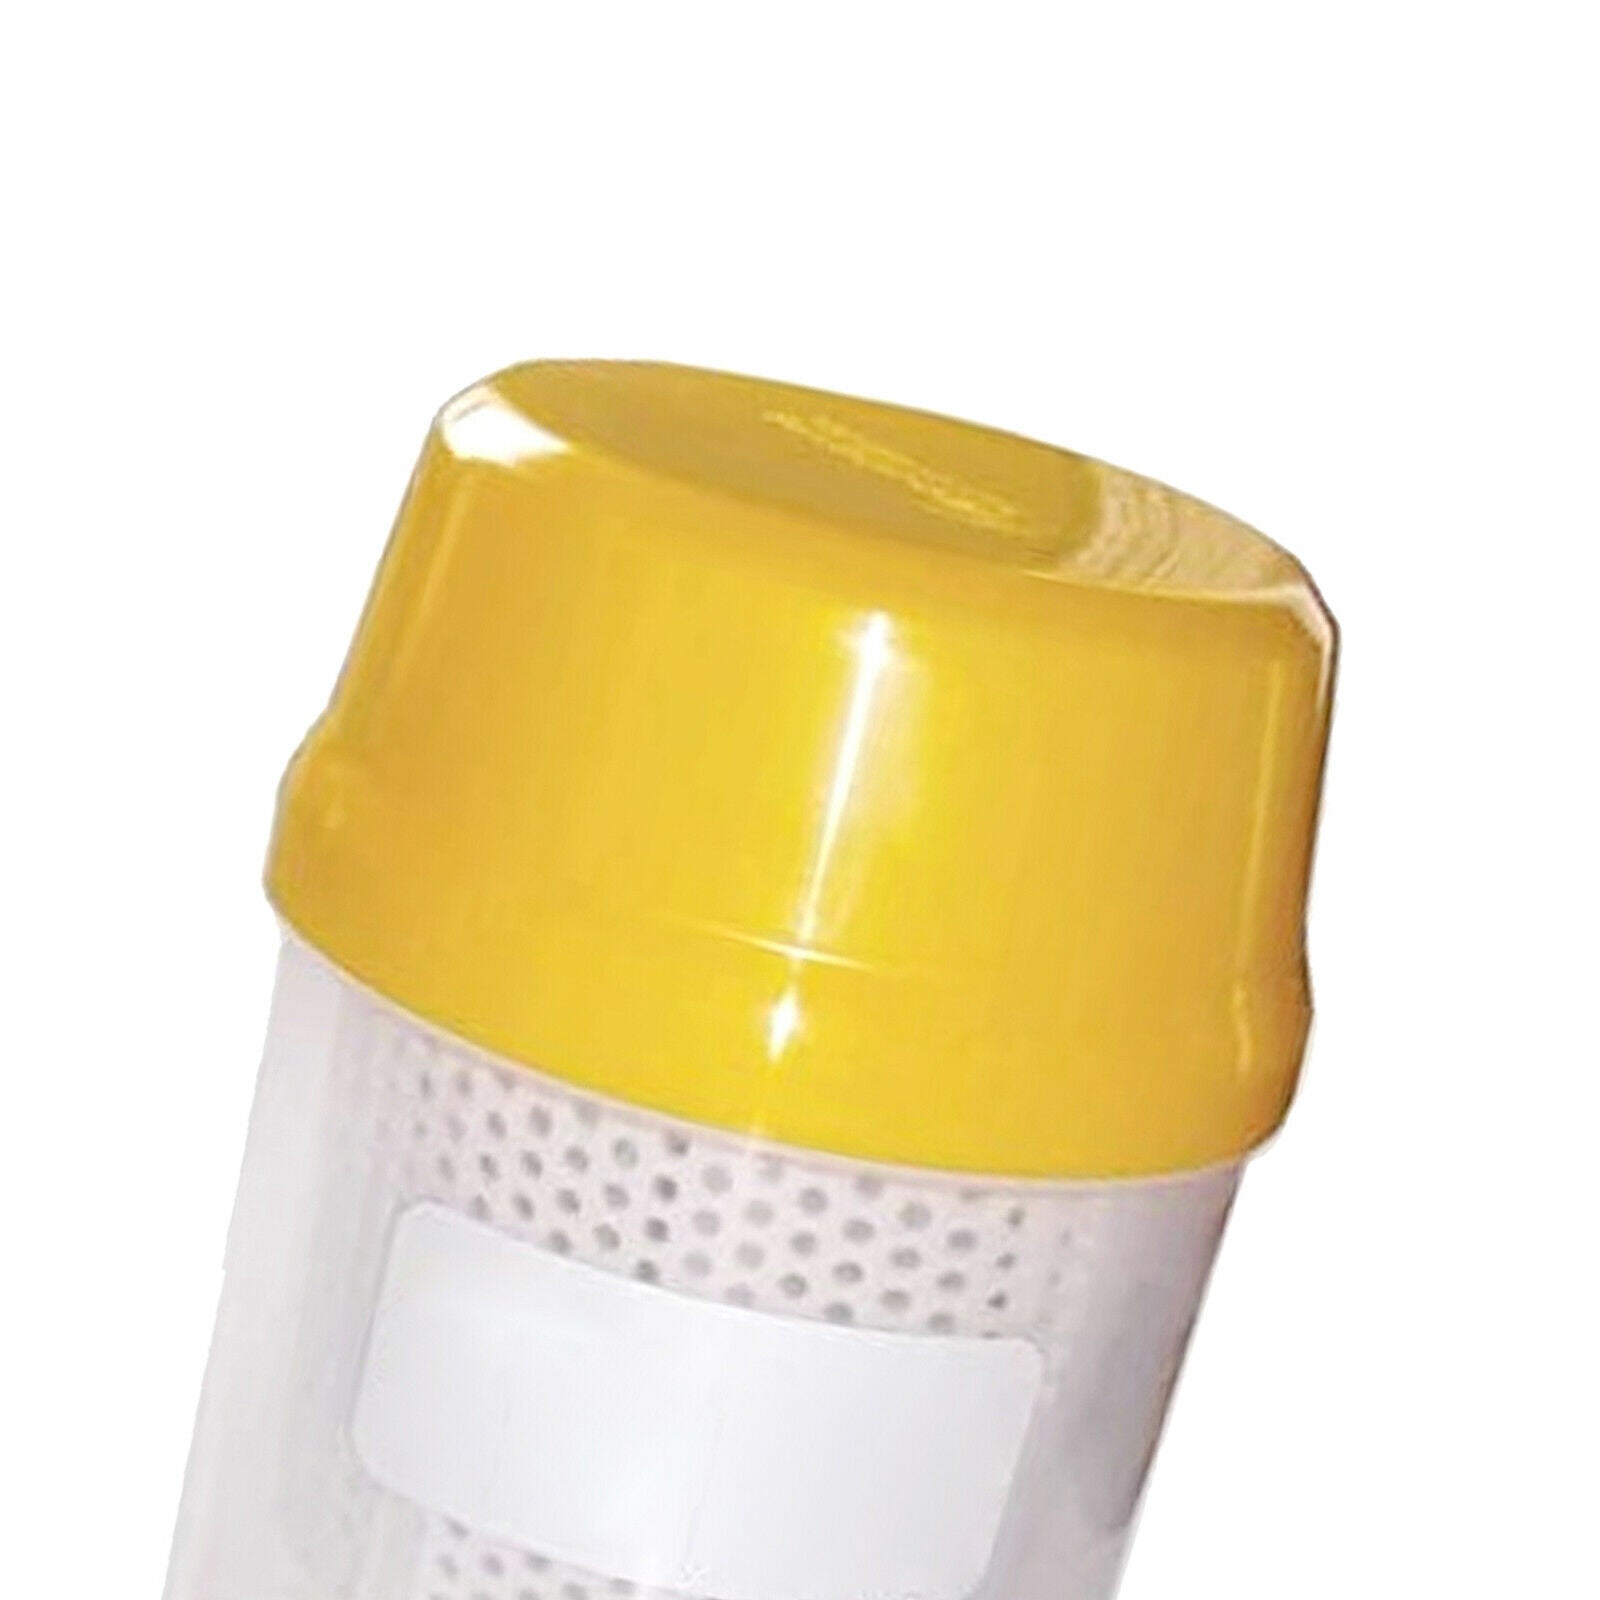 Accurate Clear Varroa Shaker Killer Measuring Bottle for Beekeeper Equipment